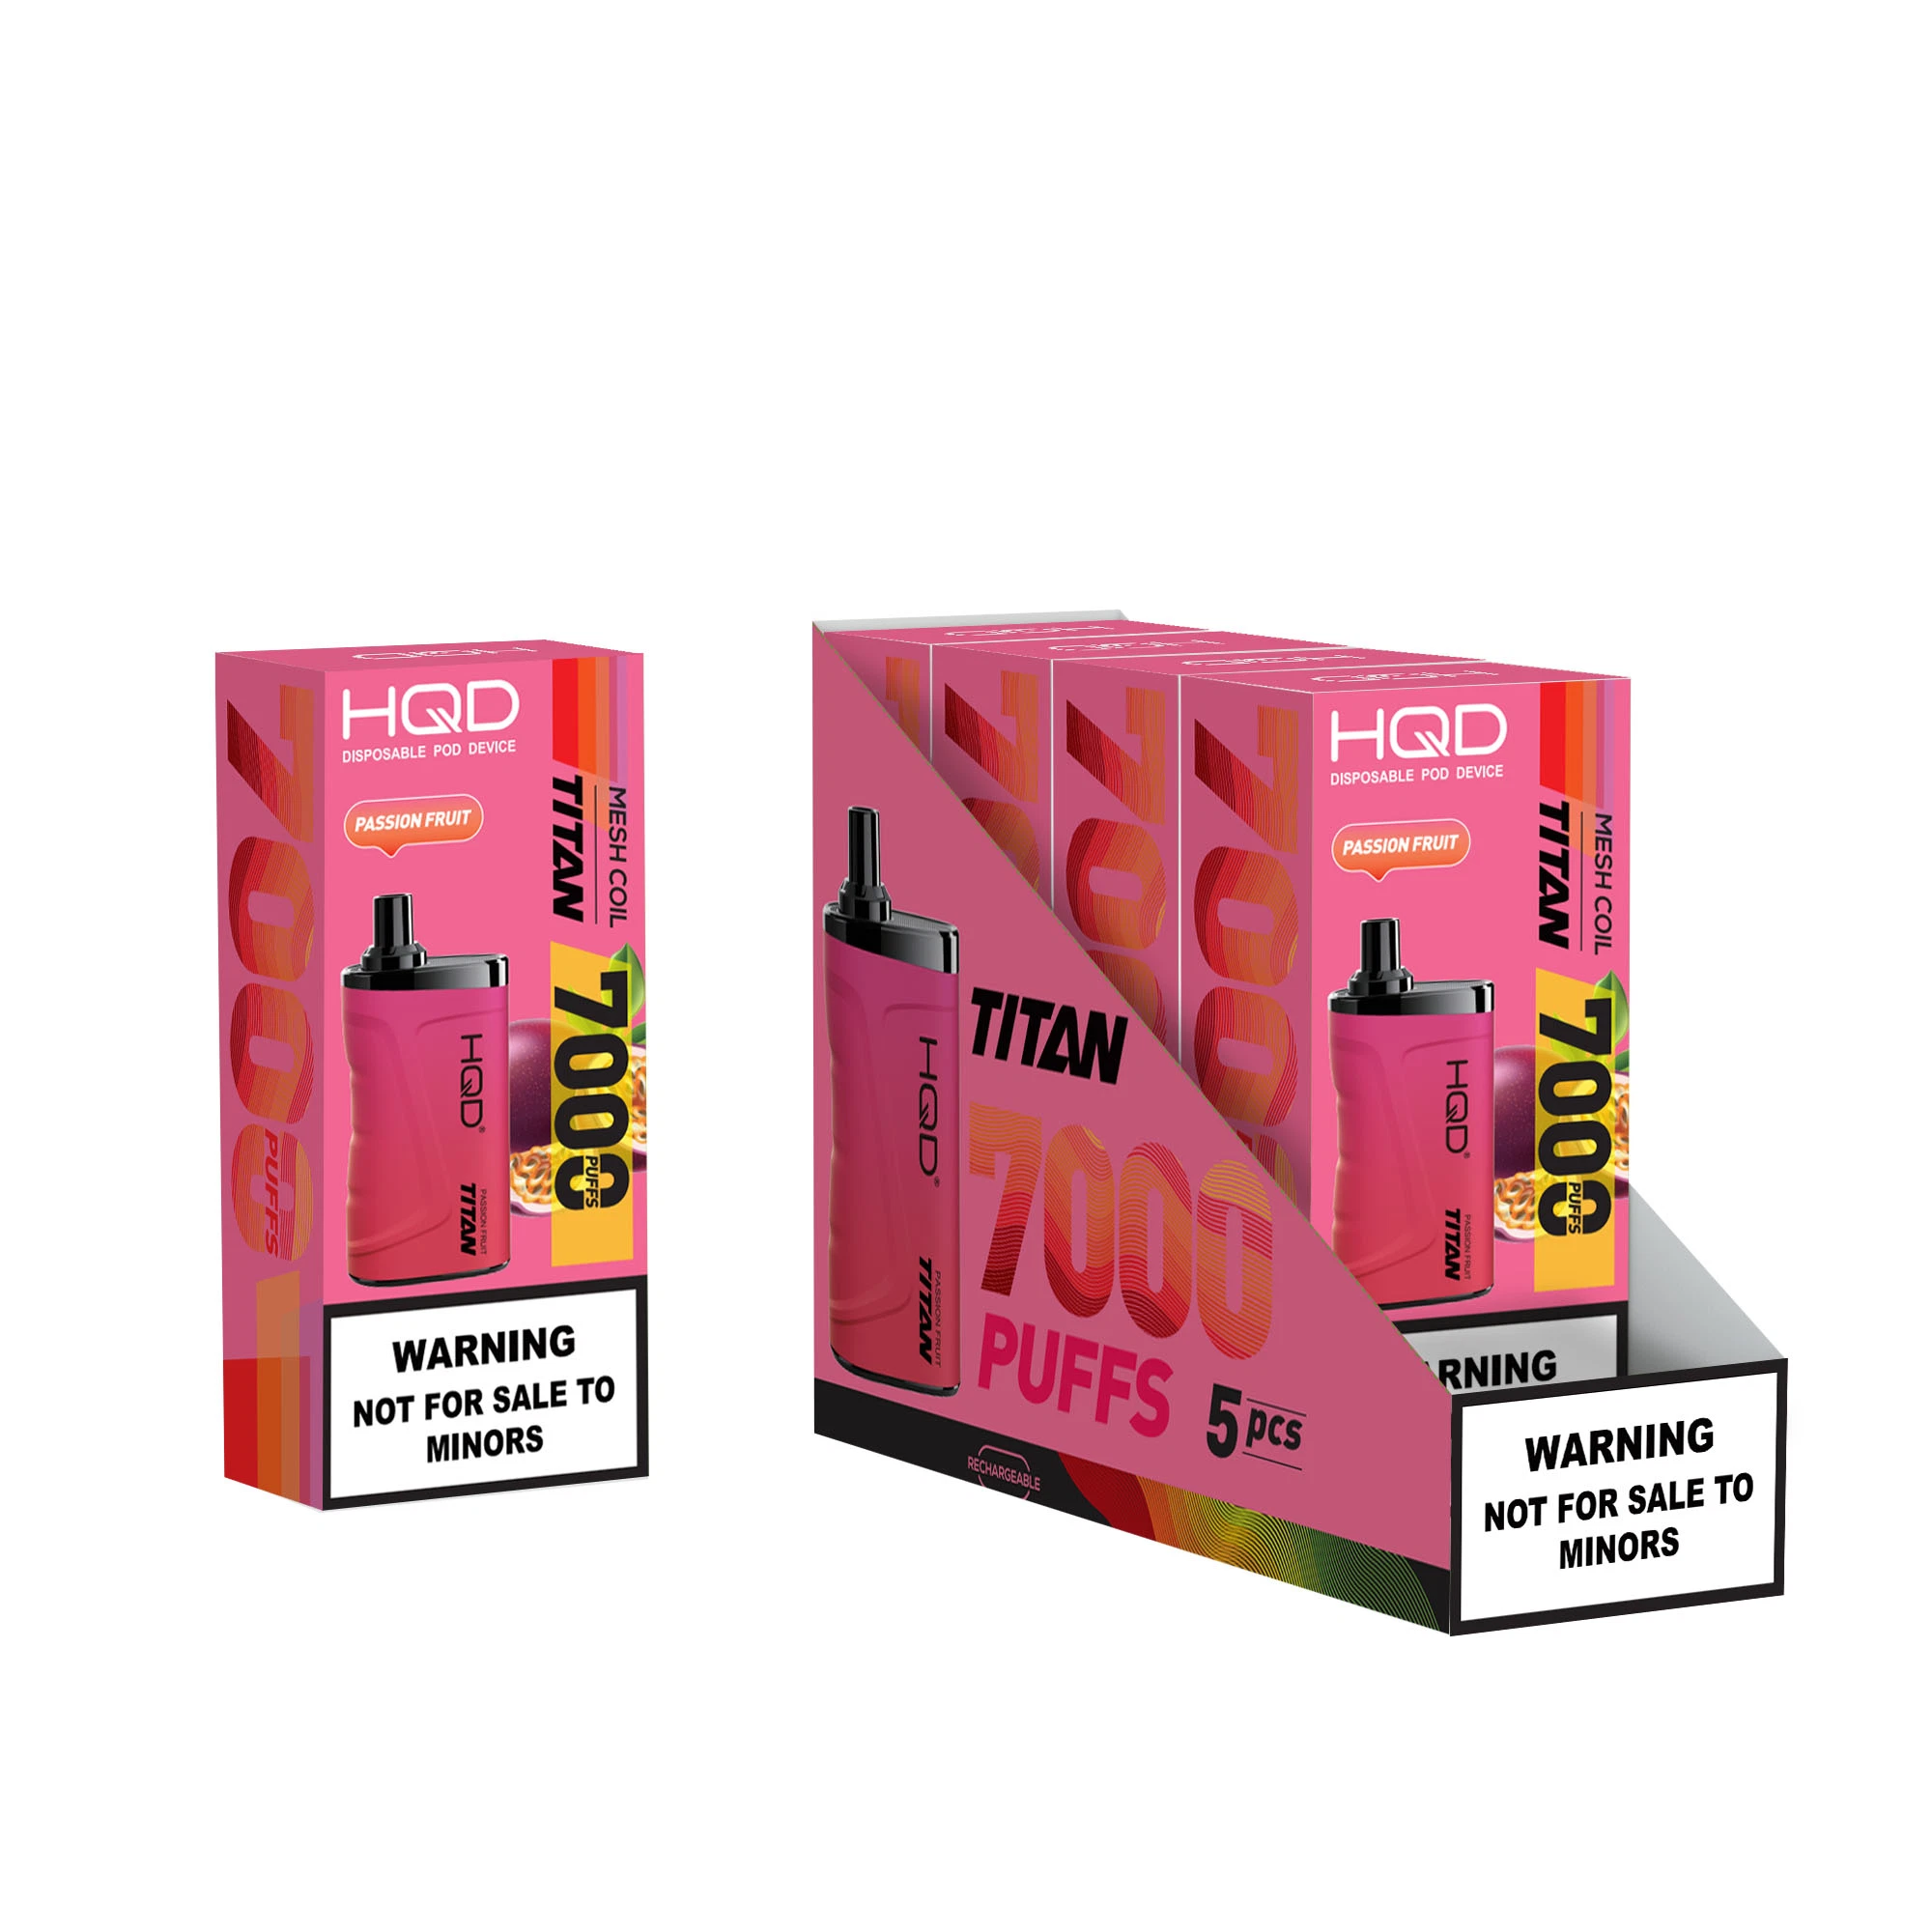 Hqd Titan 7000 inhalaciones Pen Originales de fábrica Hookah OEM/ODM jugo Mayorista/Proveedor desechables fumar Vape